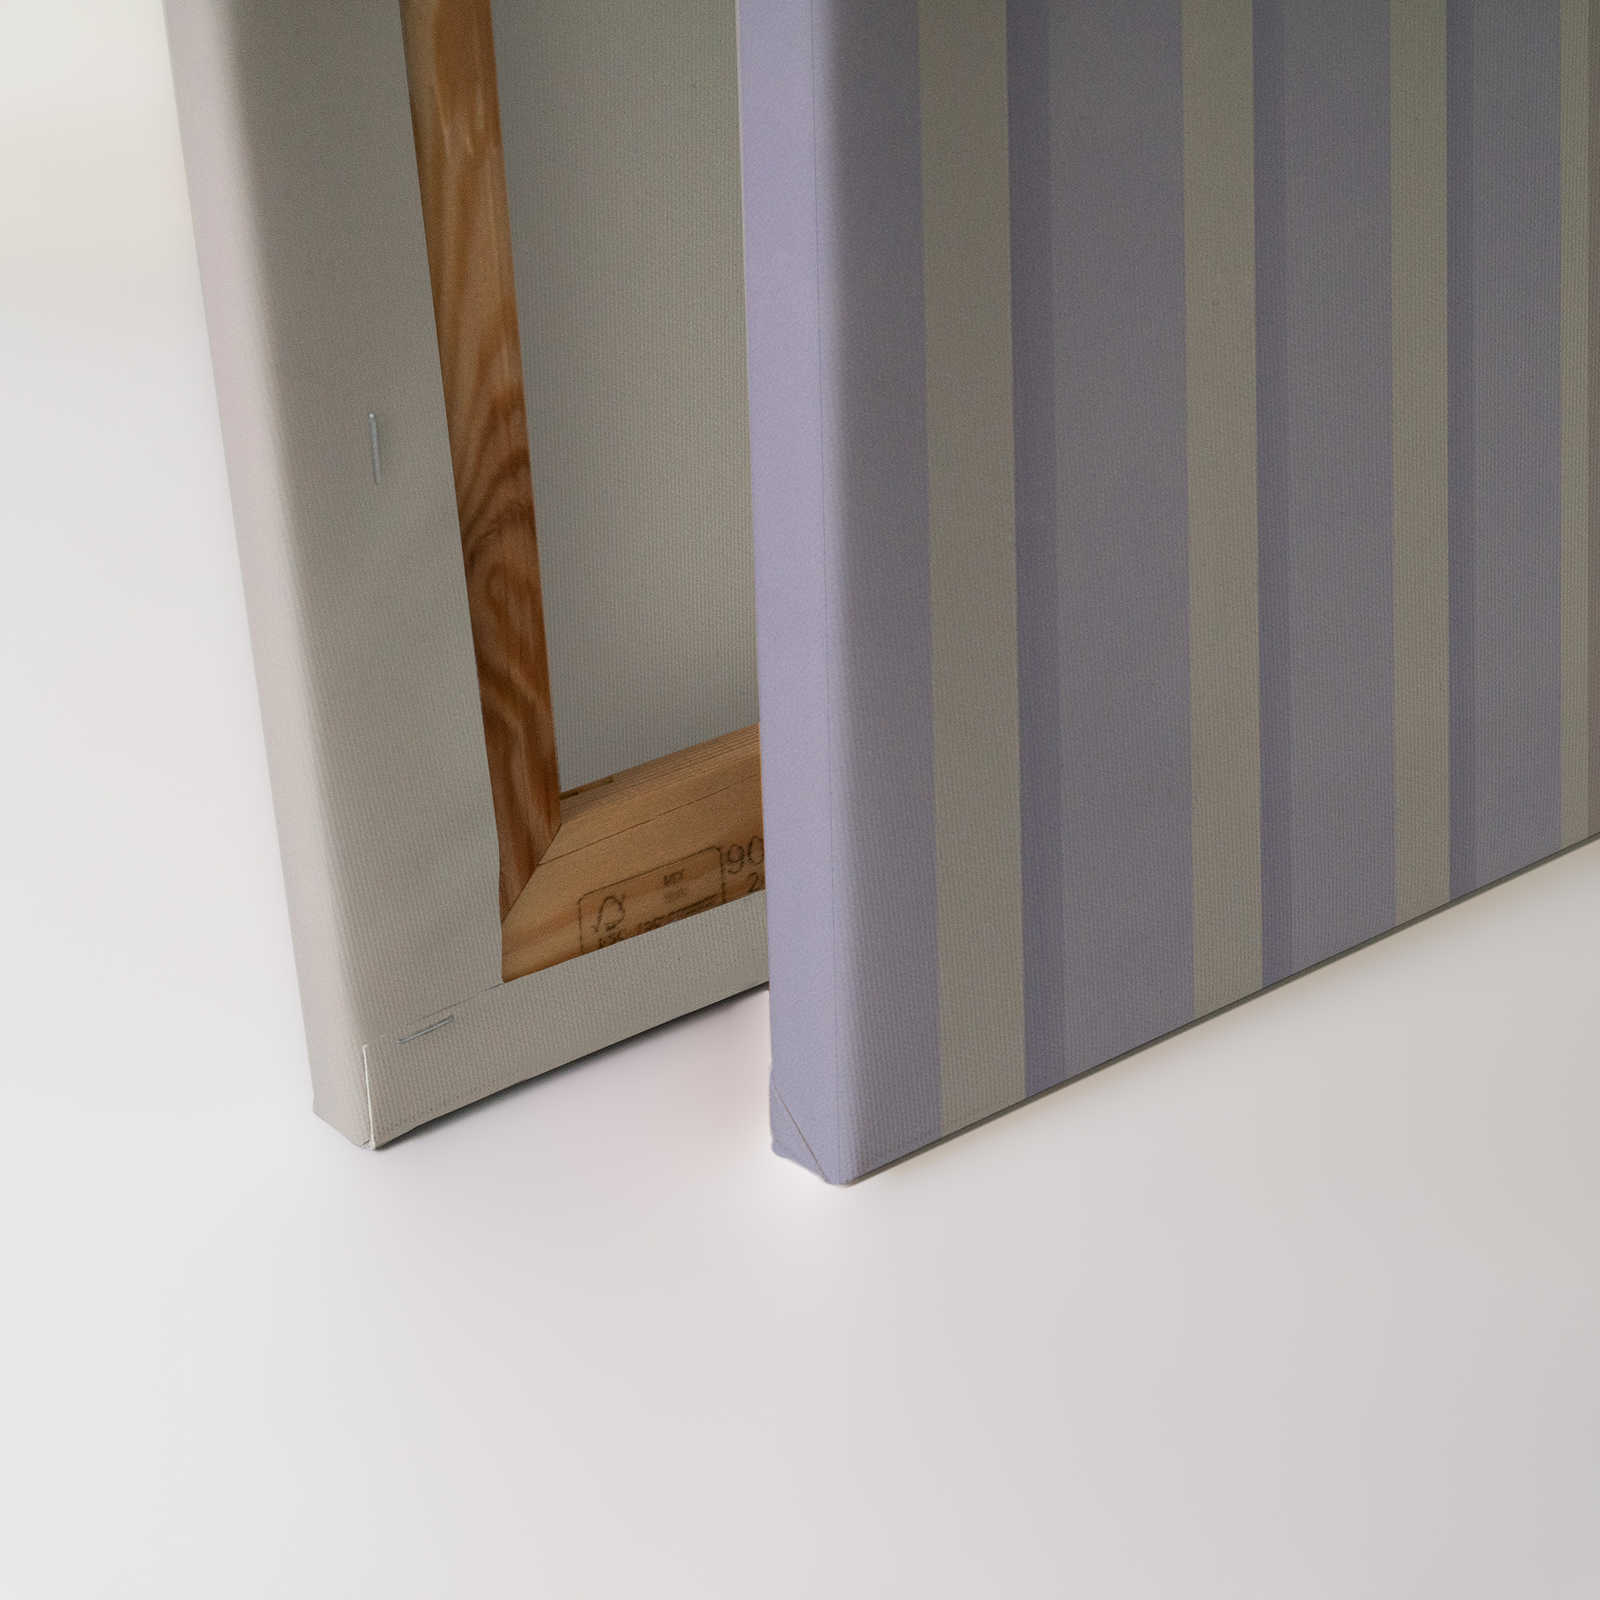             Illusion Room 1 - Canvas painting 3D Stripe Design in Purple & Grey - 1.20 m x 0.80 m
        